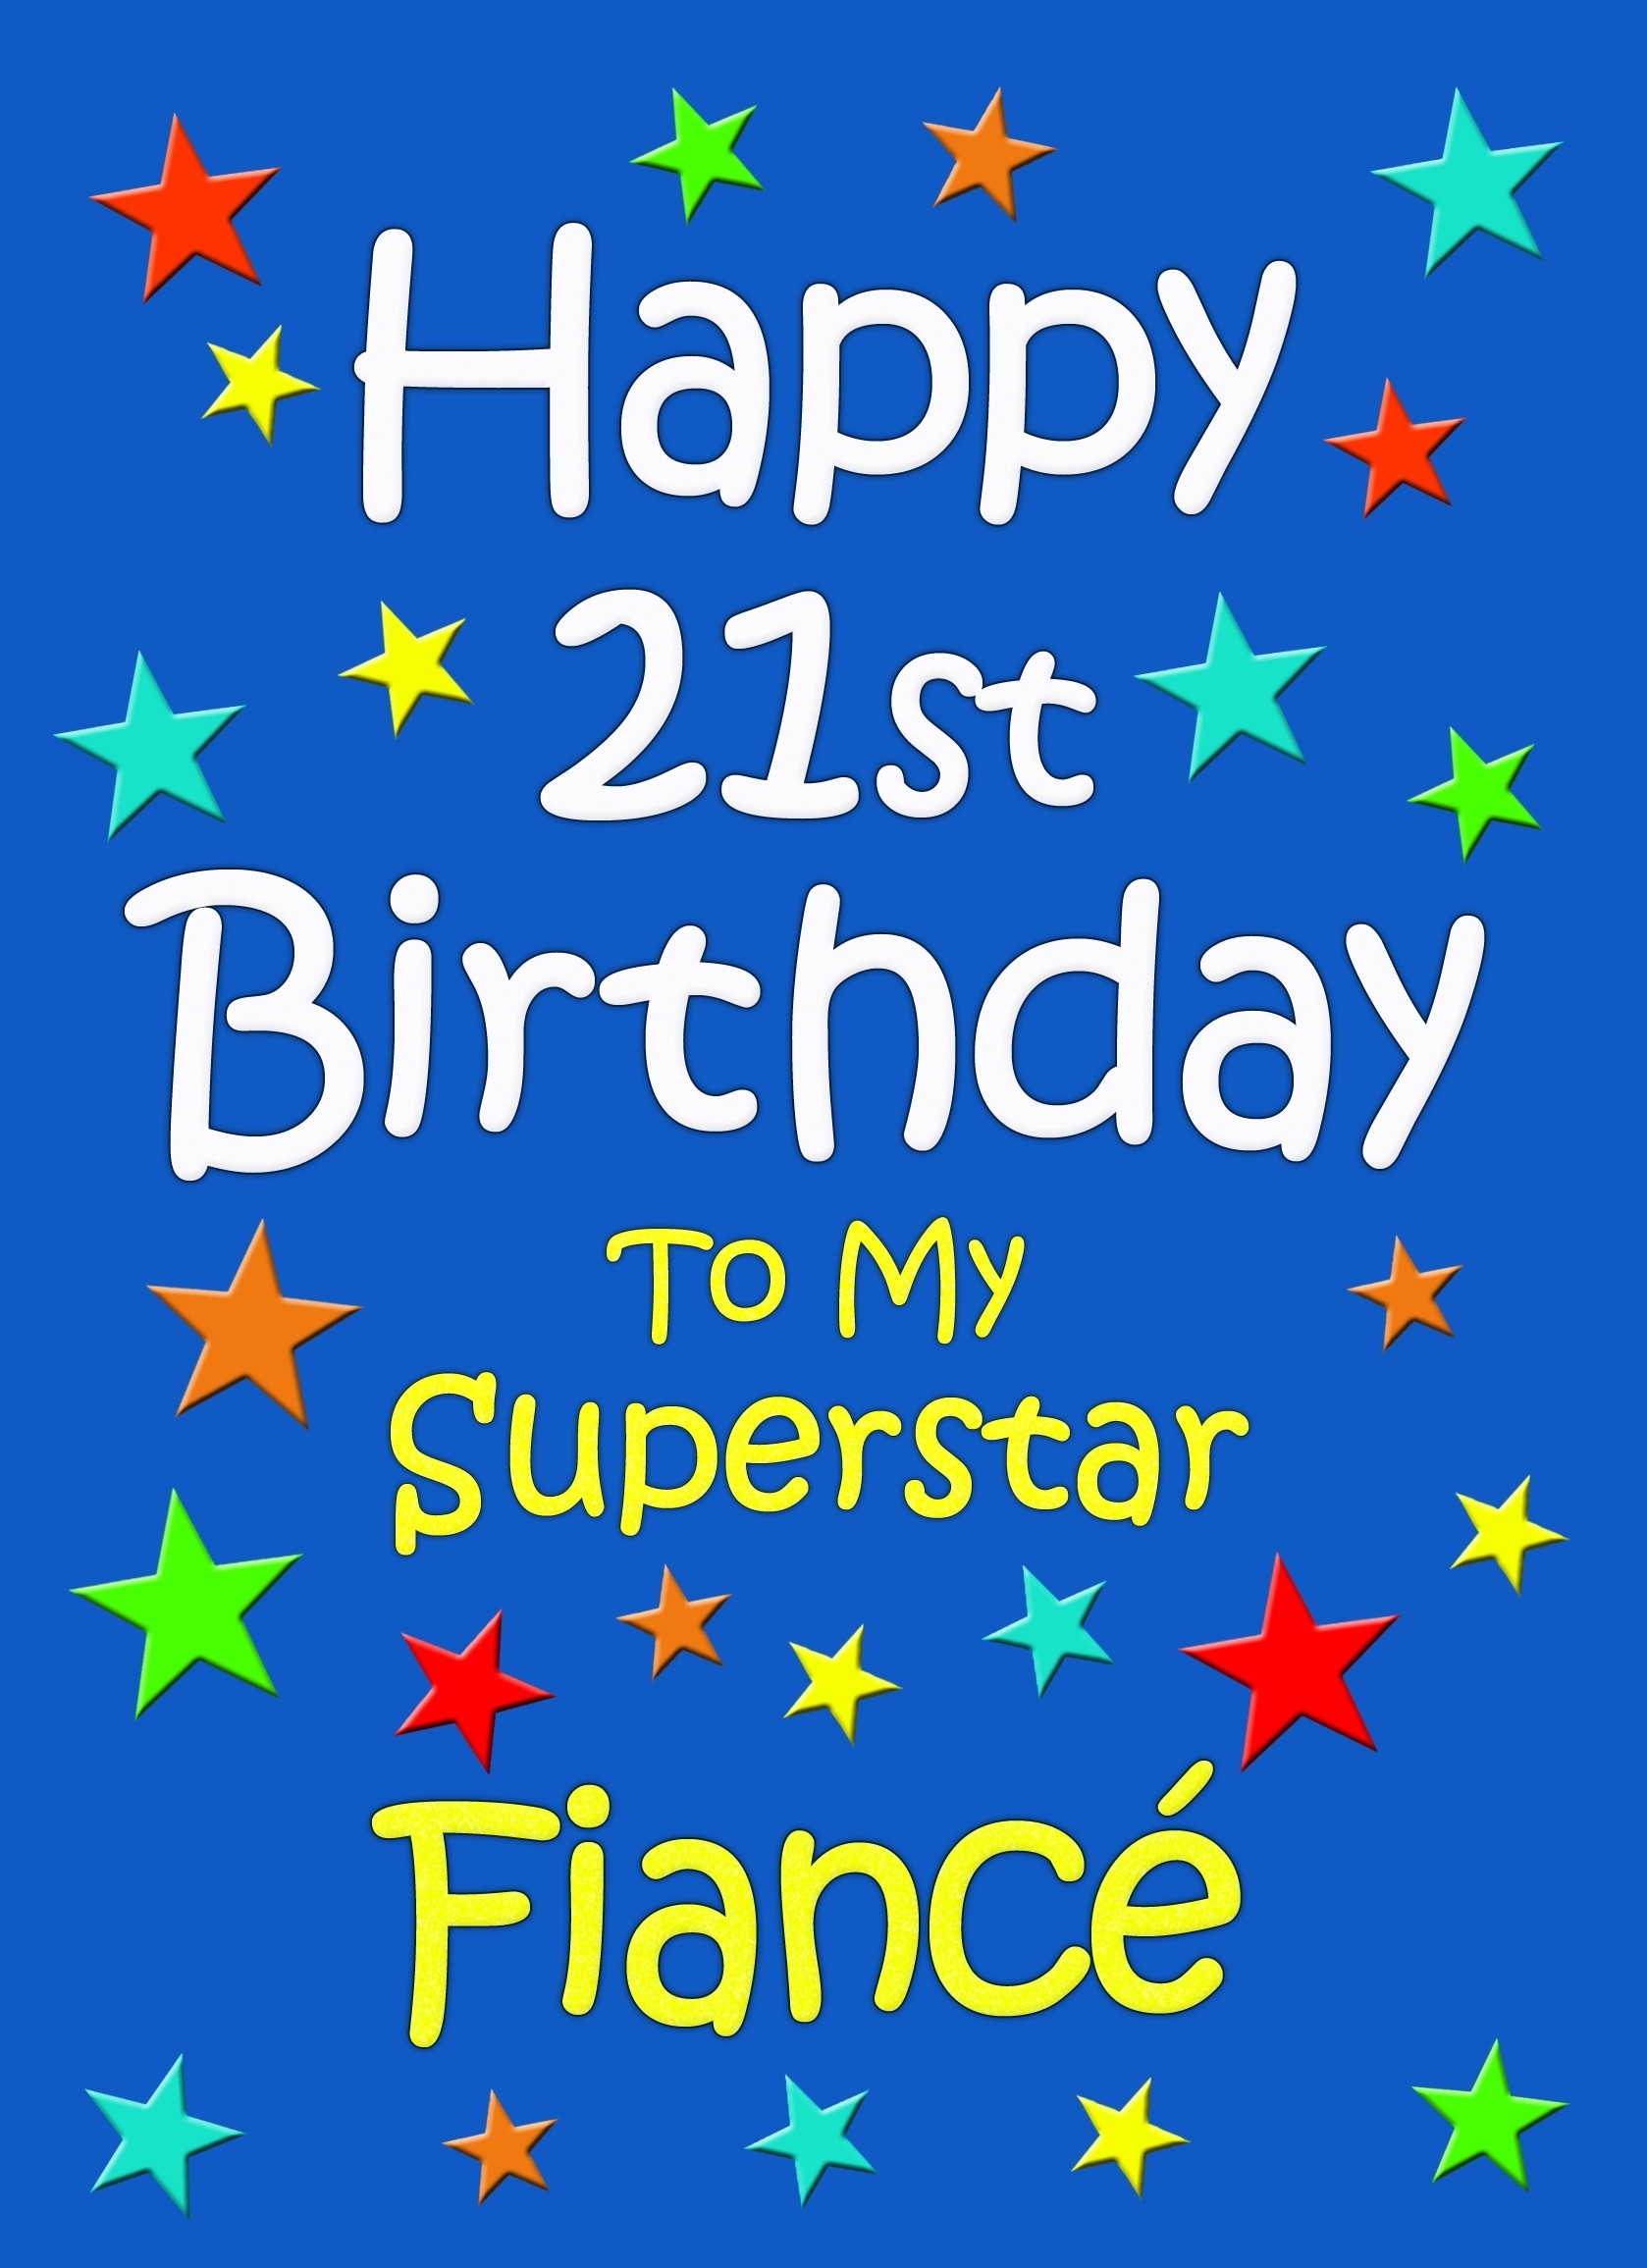 Fiance 21st Birthday Card (Blue)